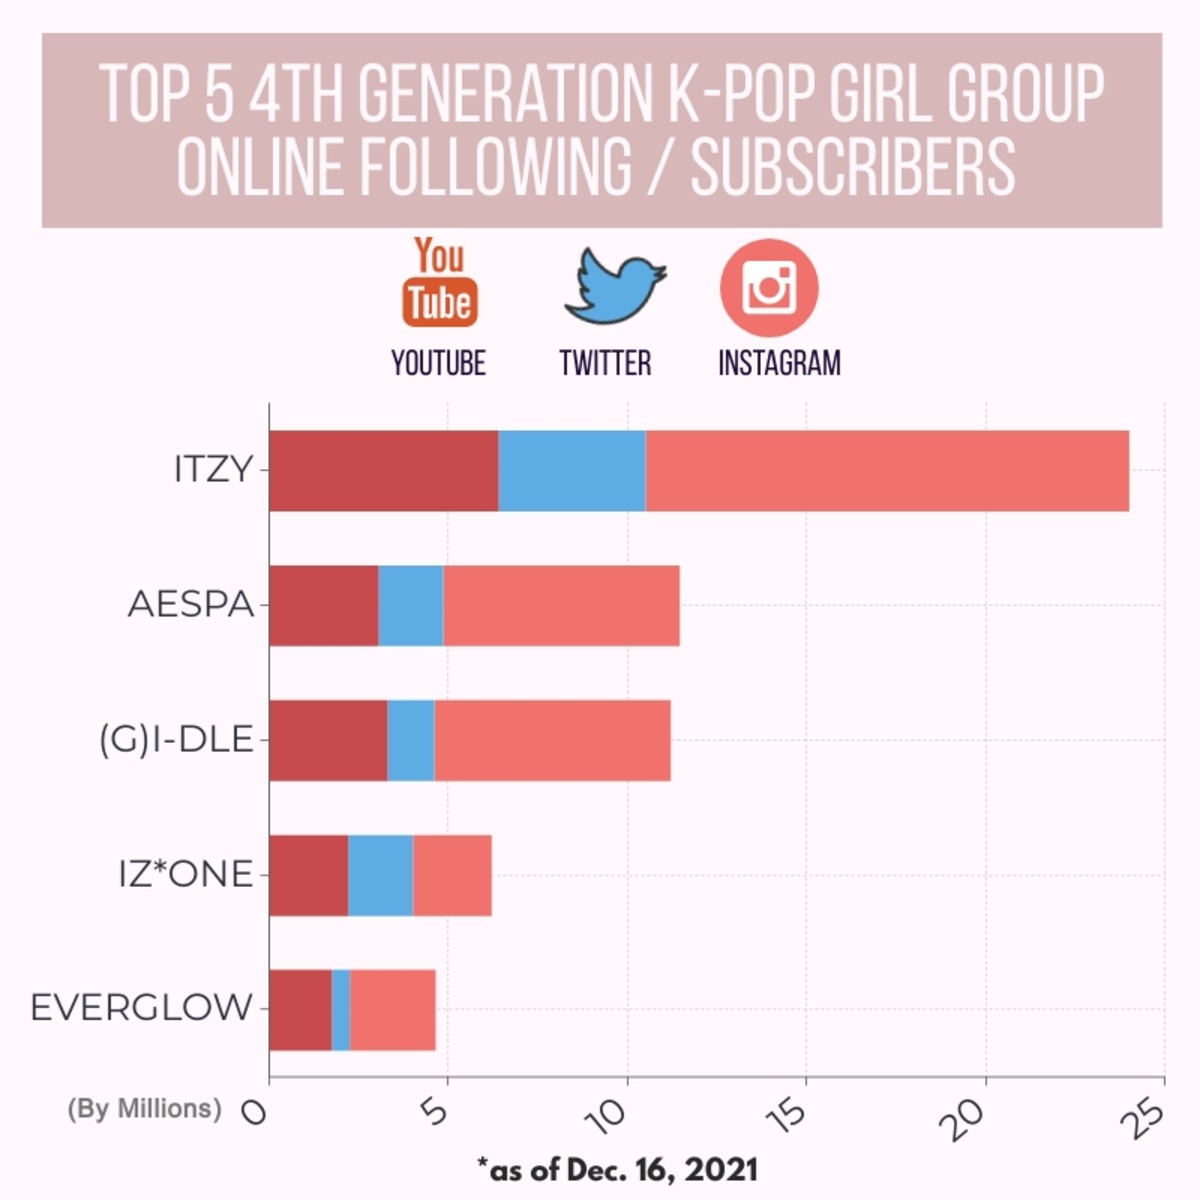 Top 5 4th Generation K-pop Girl Group Youtube, Twitter, Instagram following 2021